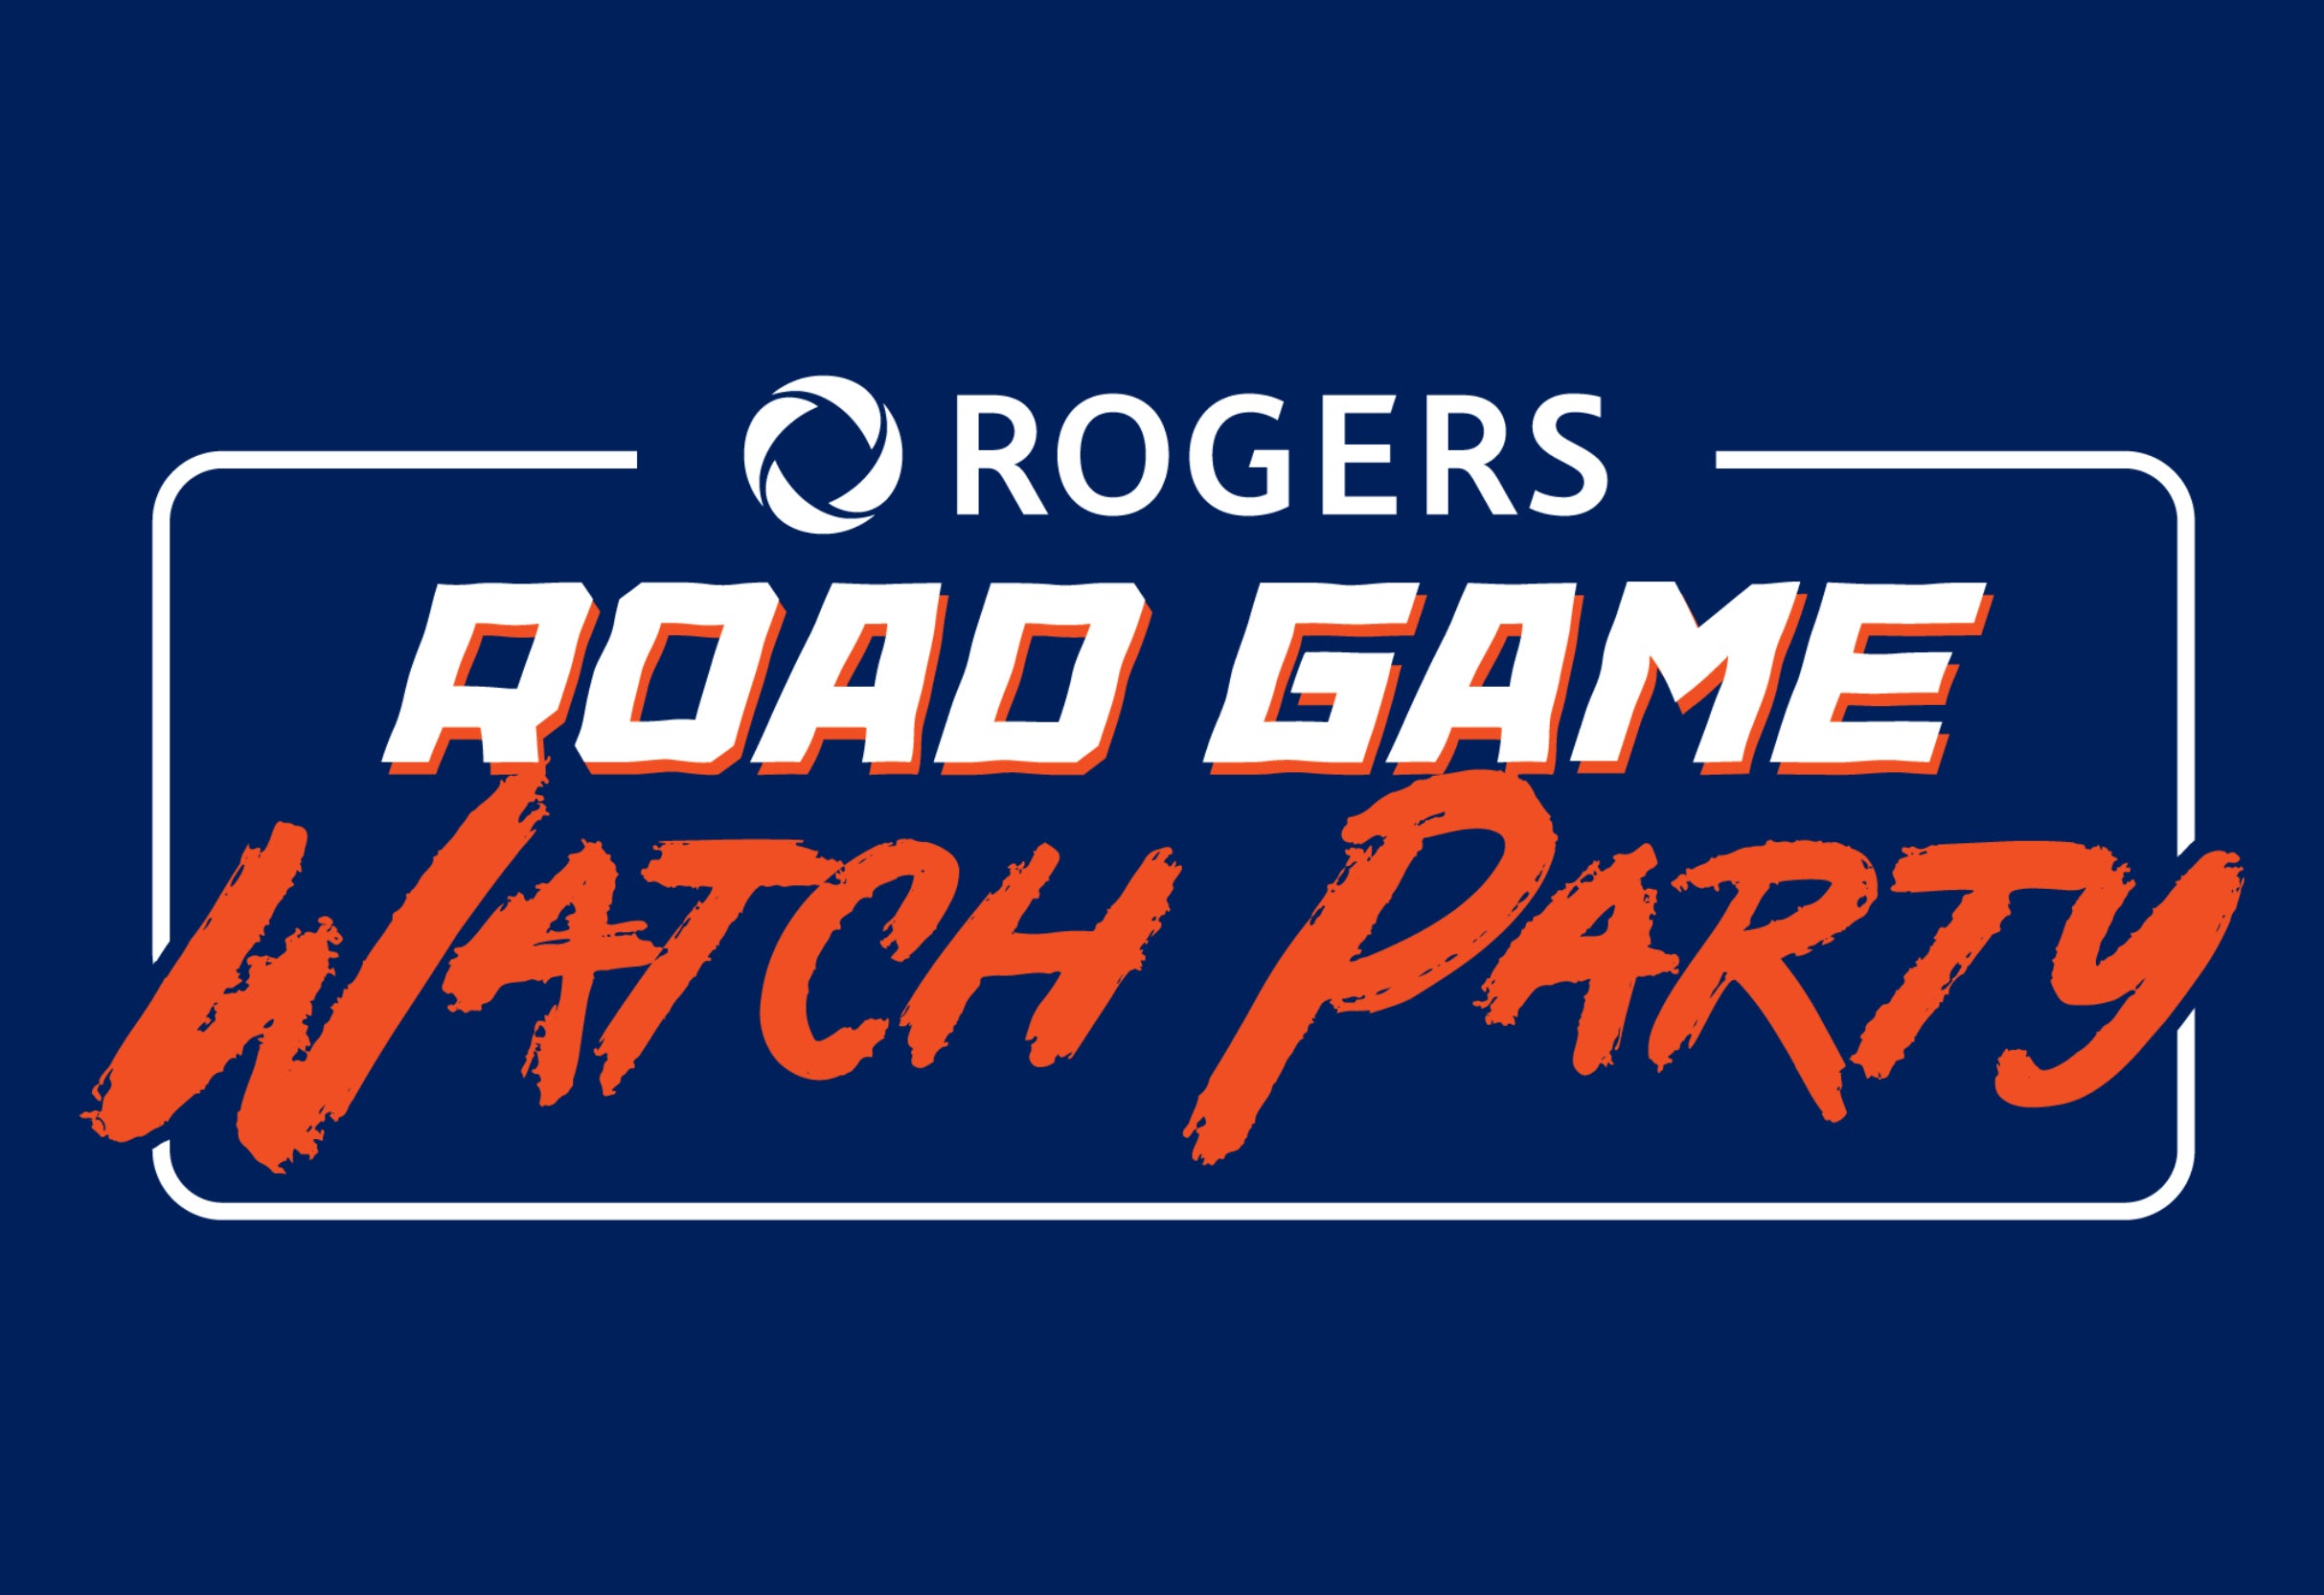 Oilers Road Game Watch Party - Edmonton Oilers v. Los Angeles Kings in Edmonton promo photo for Rogers presale offer code